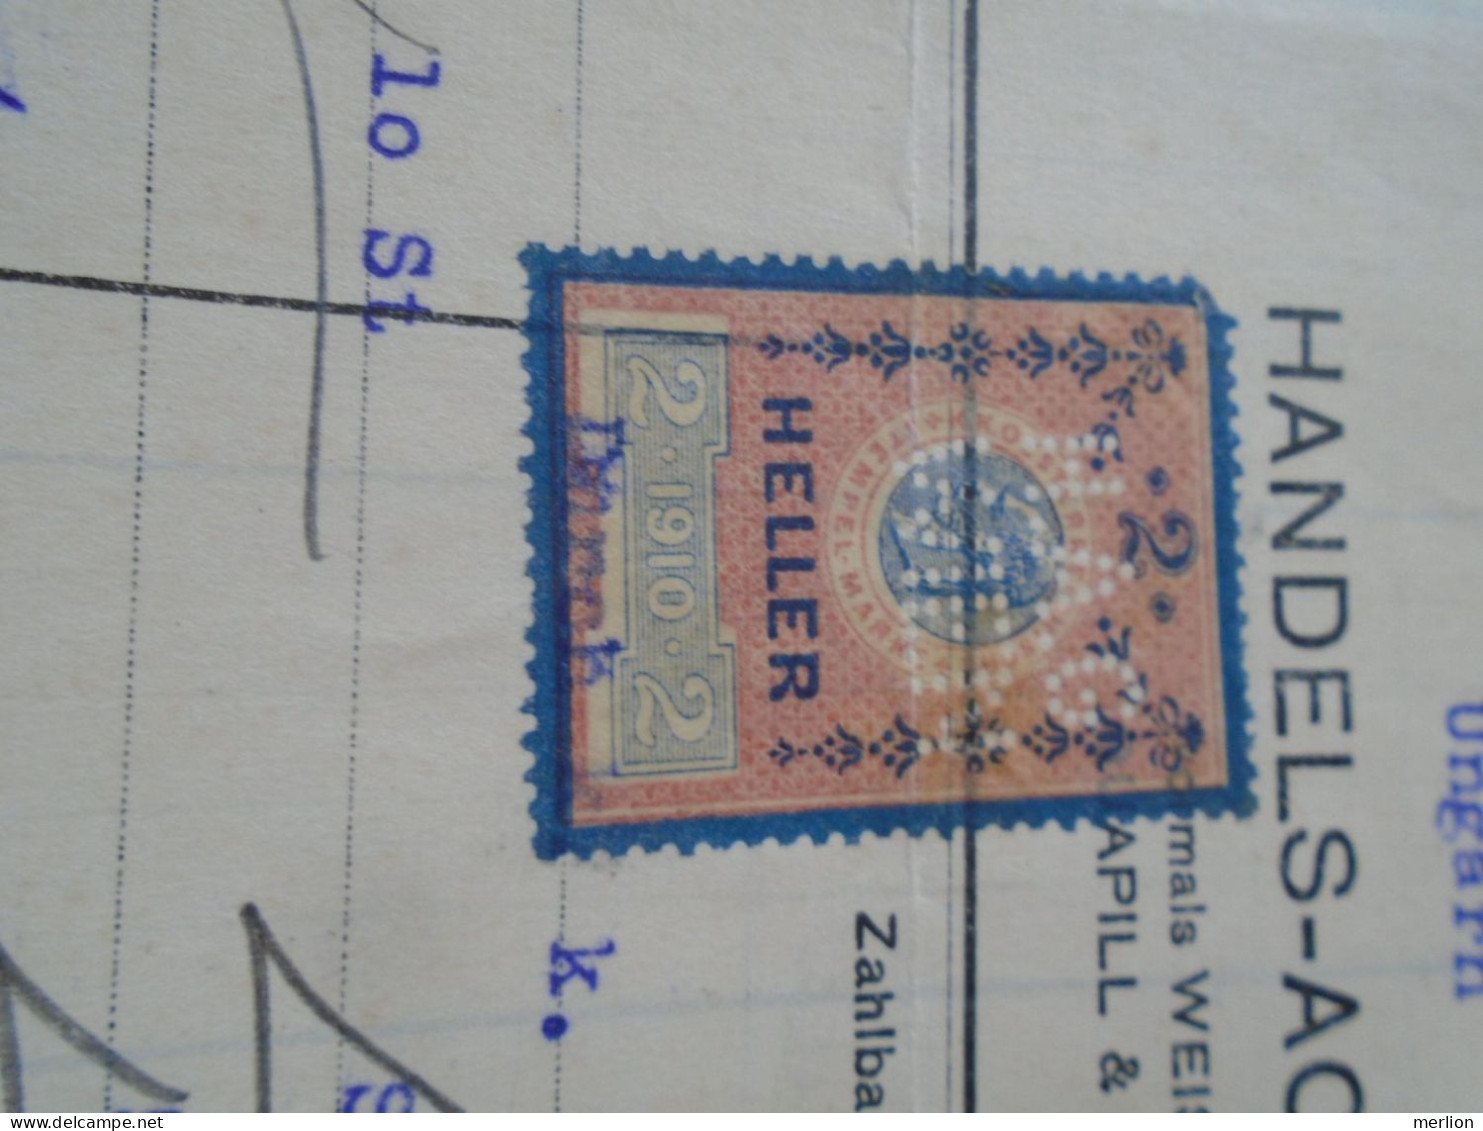 ZA470.29 Old Invoice  Austria -Handels-Actien Ges. WIEN 1914 Sent To Nandor LANTZ Temesszépfalu Banat Hungary Romania - Österreich